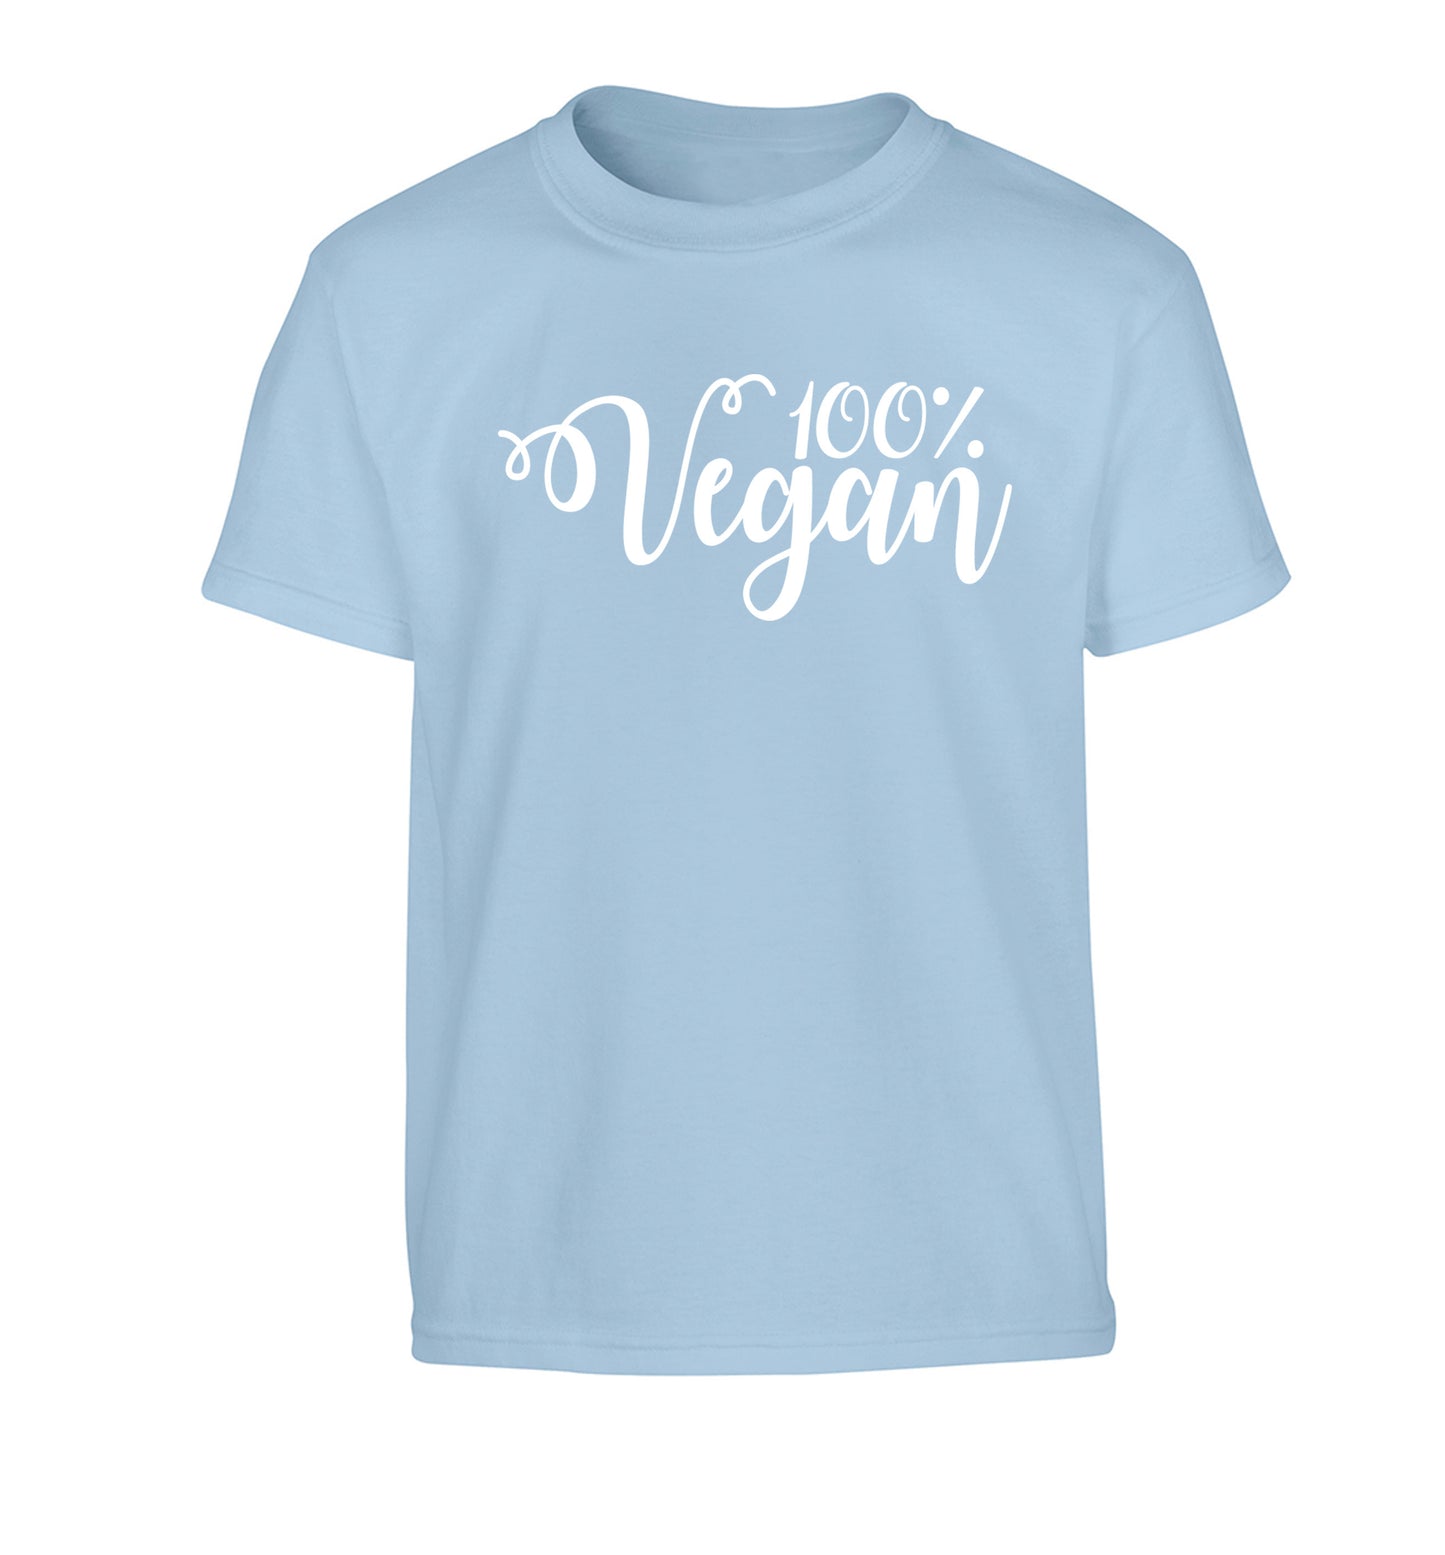 100% Vegan Children's light blue Tshirt 12-14 Years